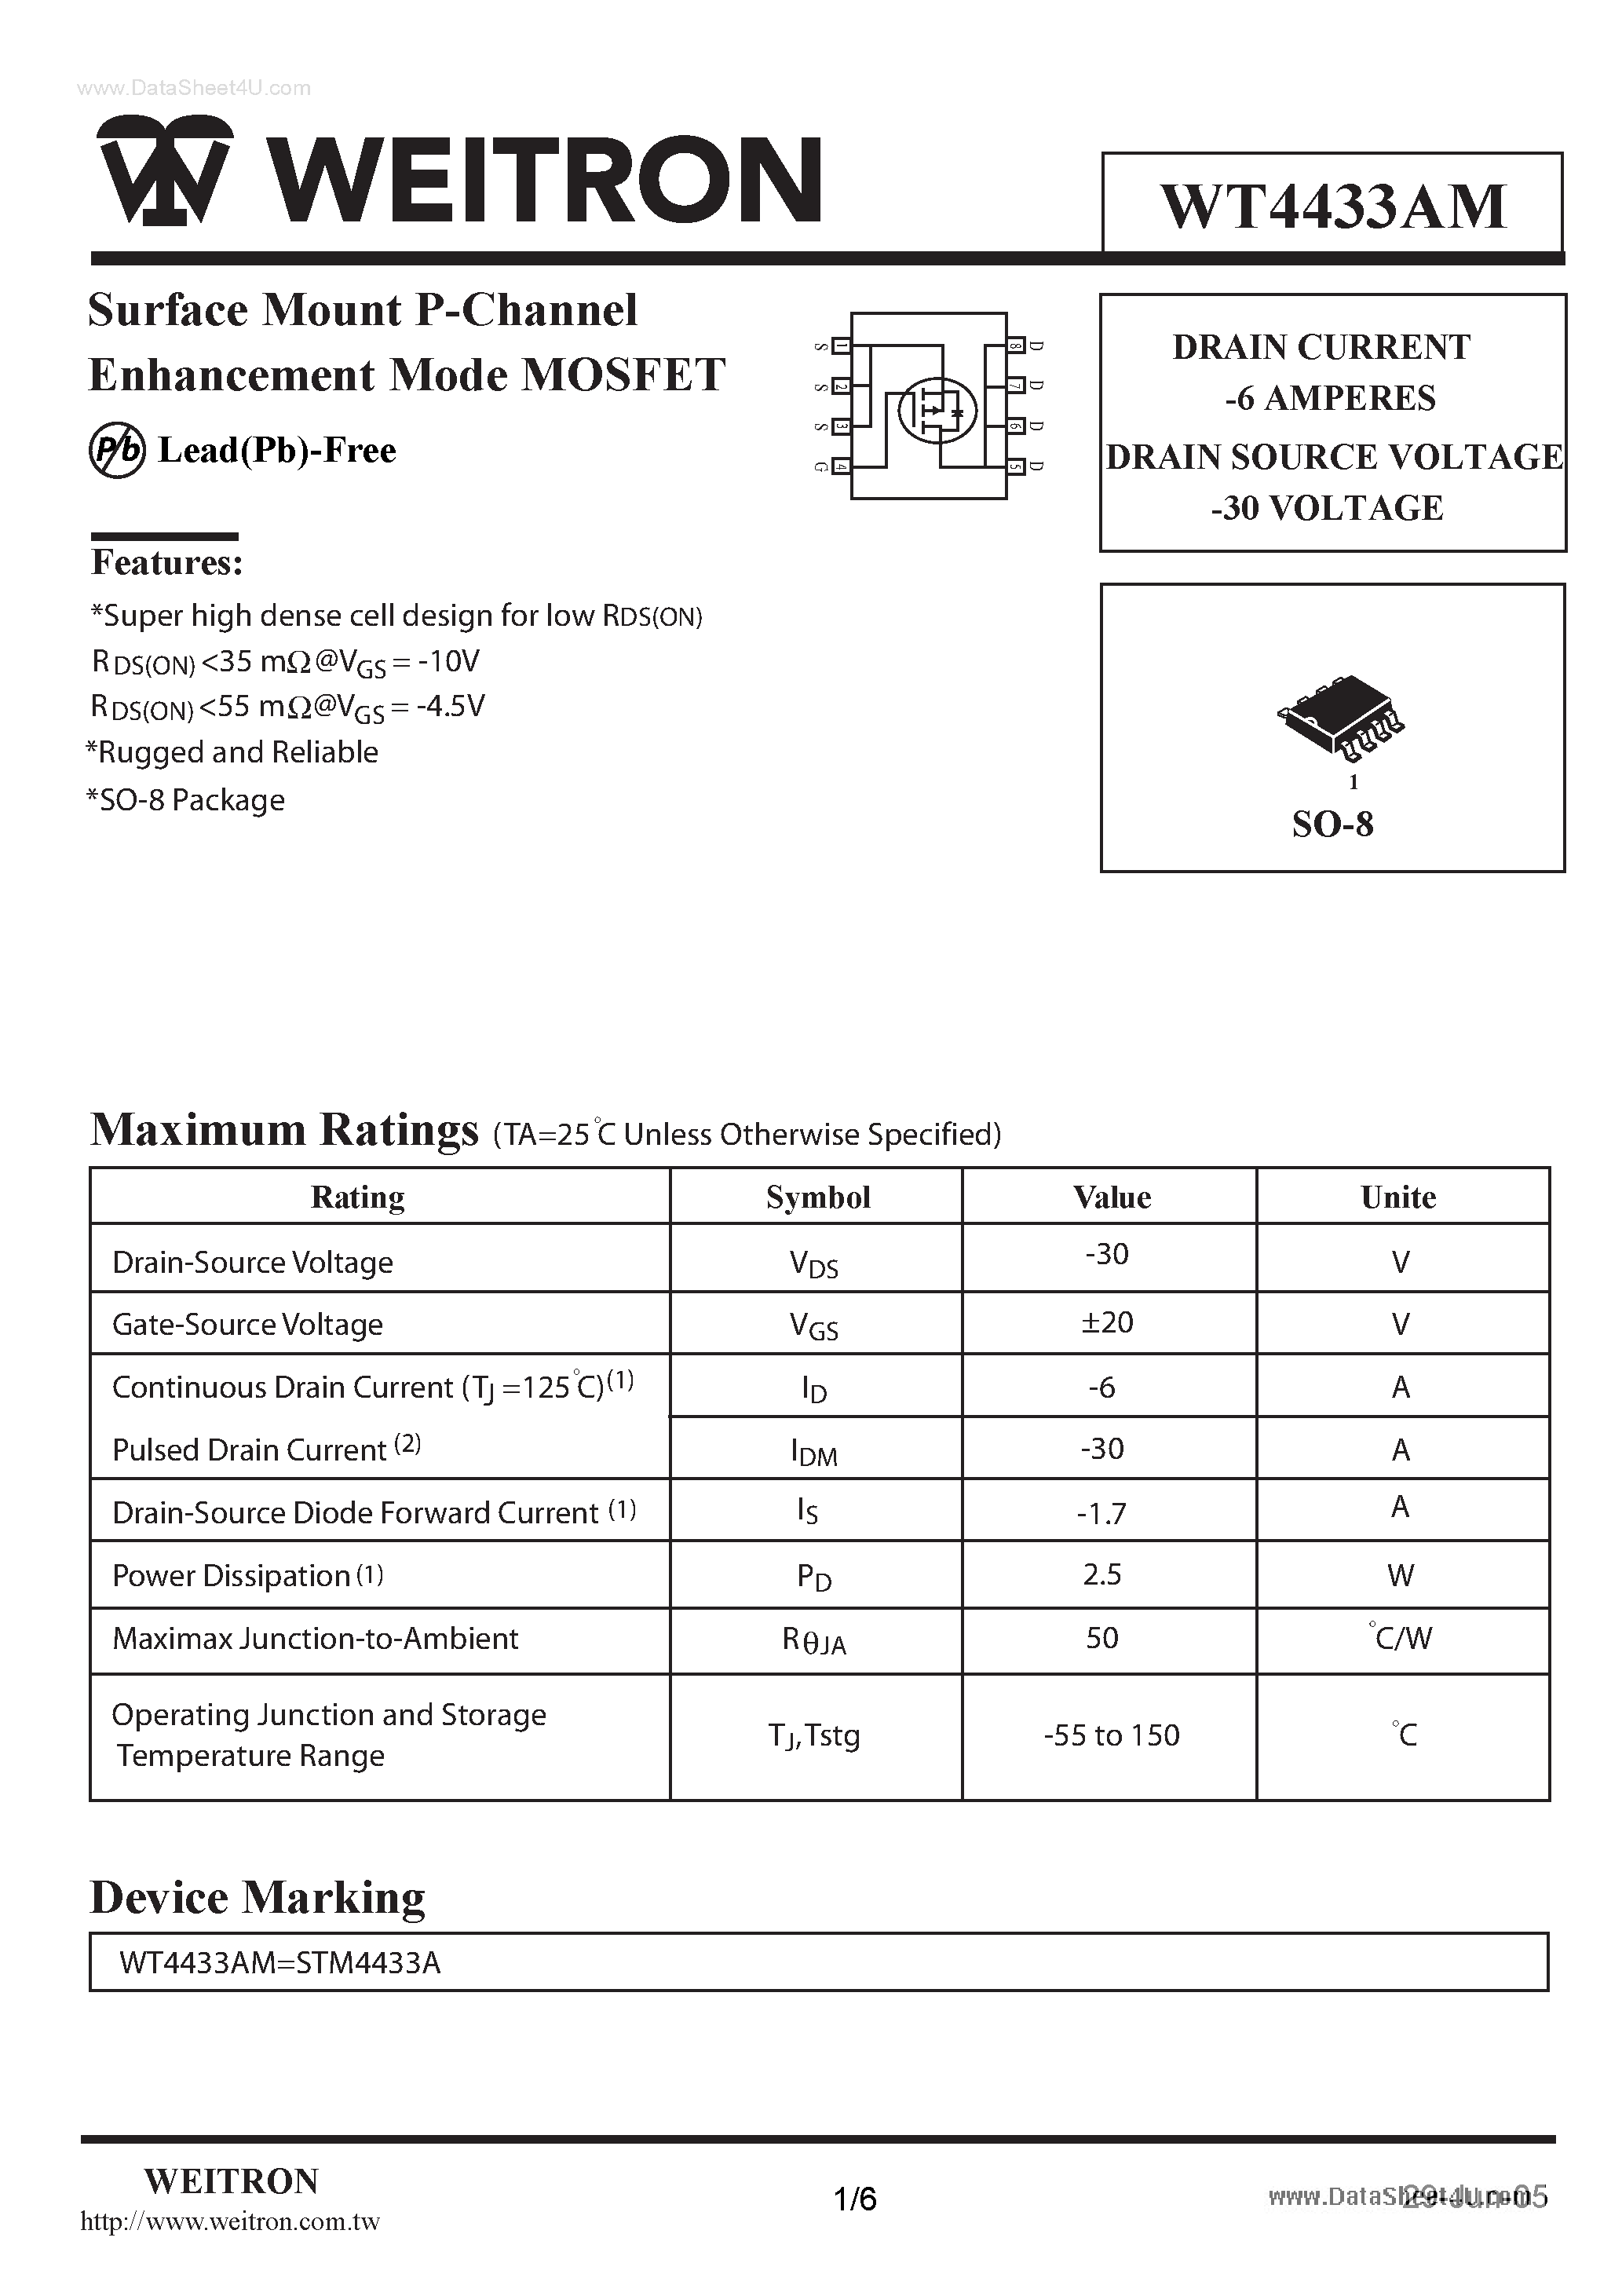 Datasheet WT4433AM - Surface Mount P-Channel Enhancement Mode MOSFET page 1